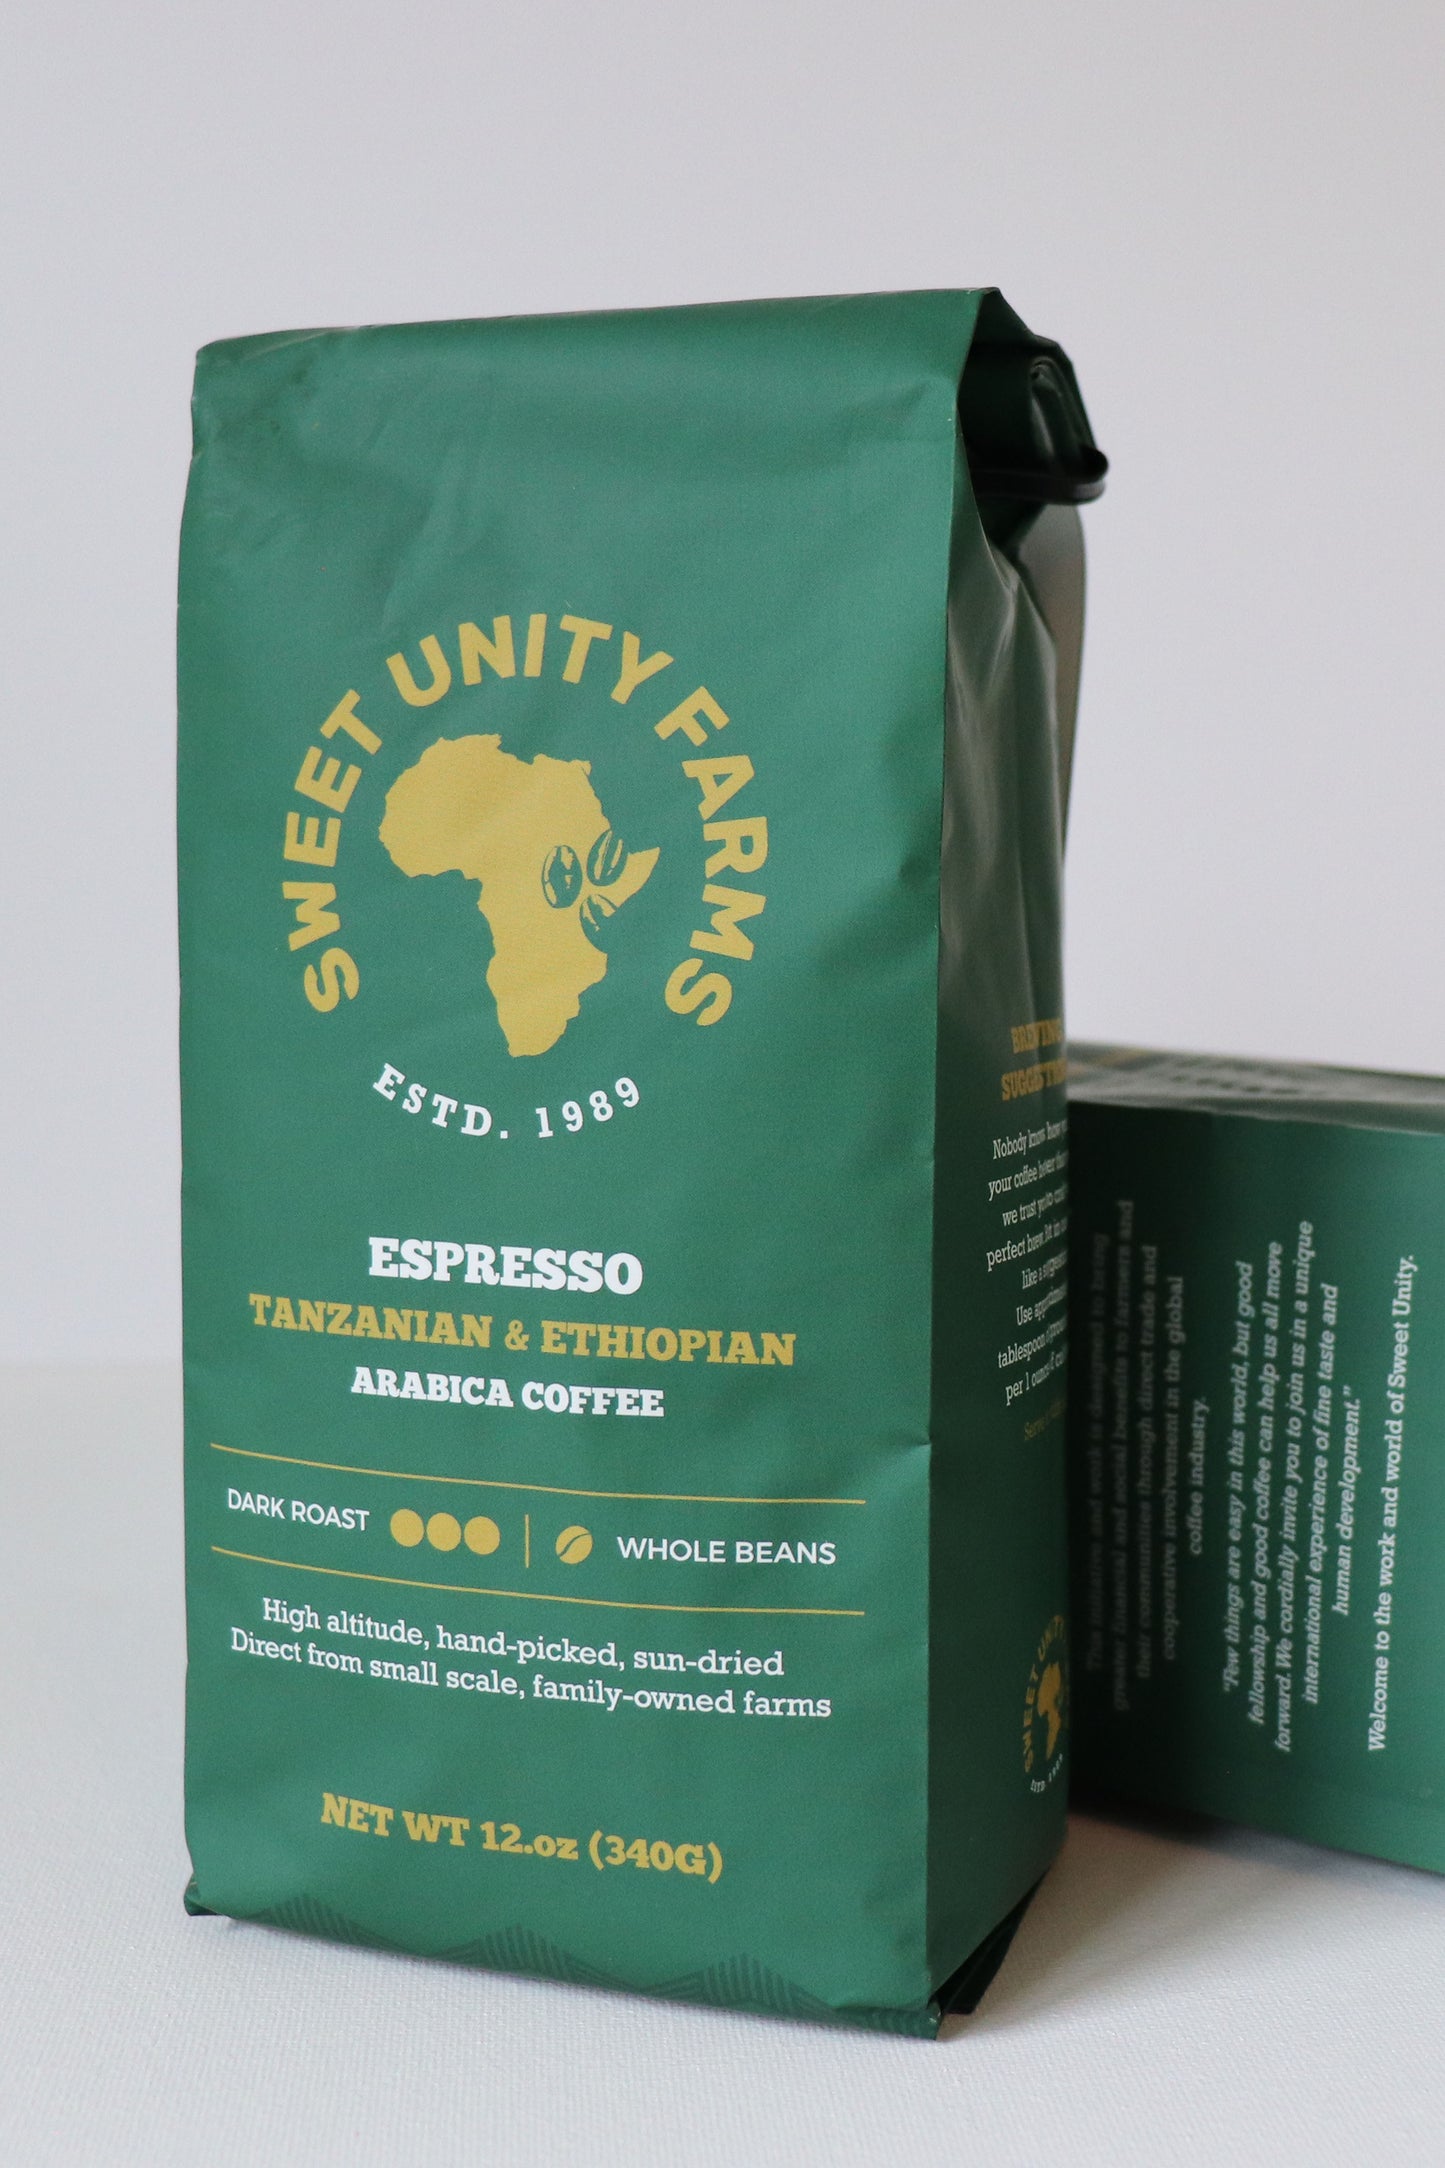 Espresso Ethiopian & Tanzanian